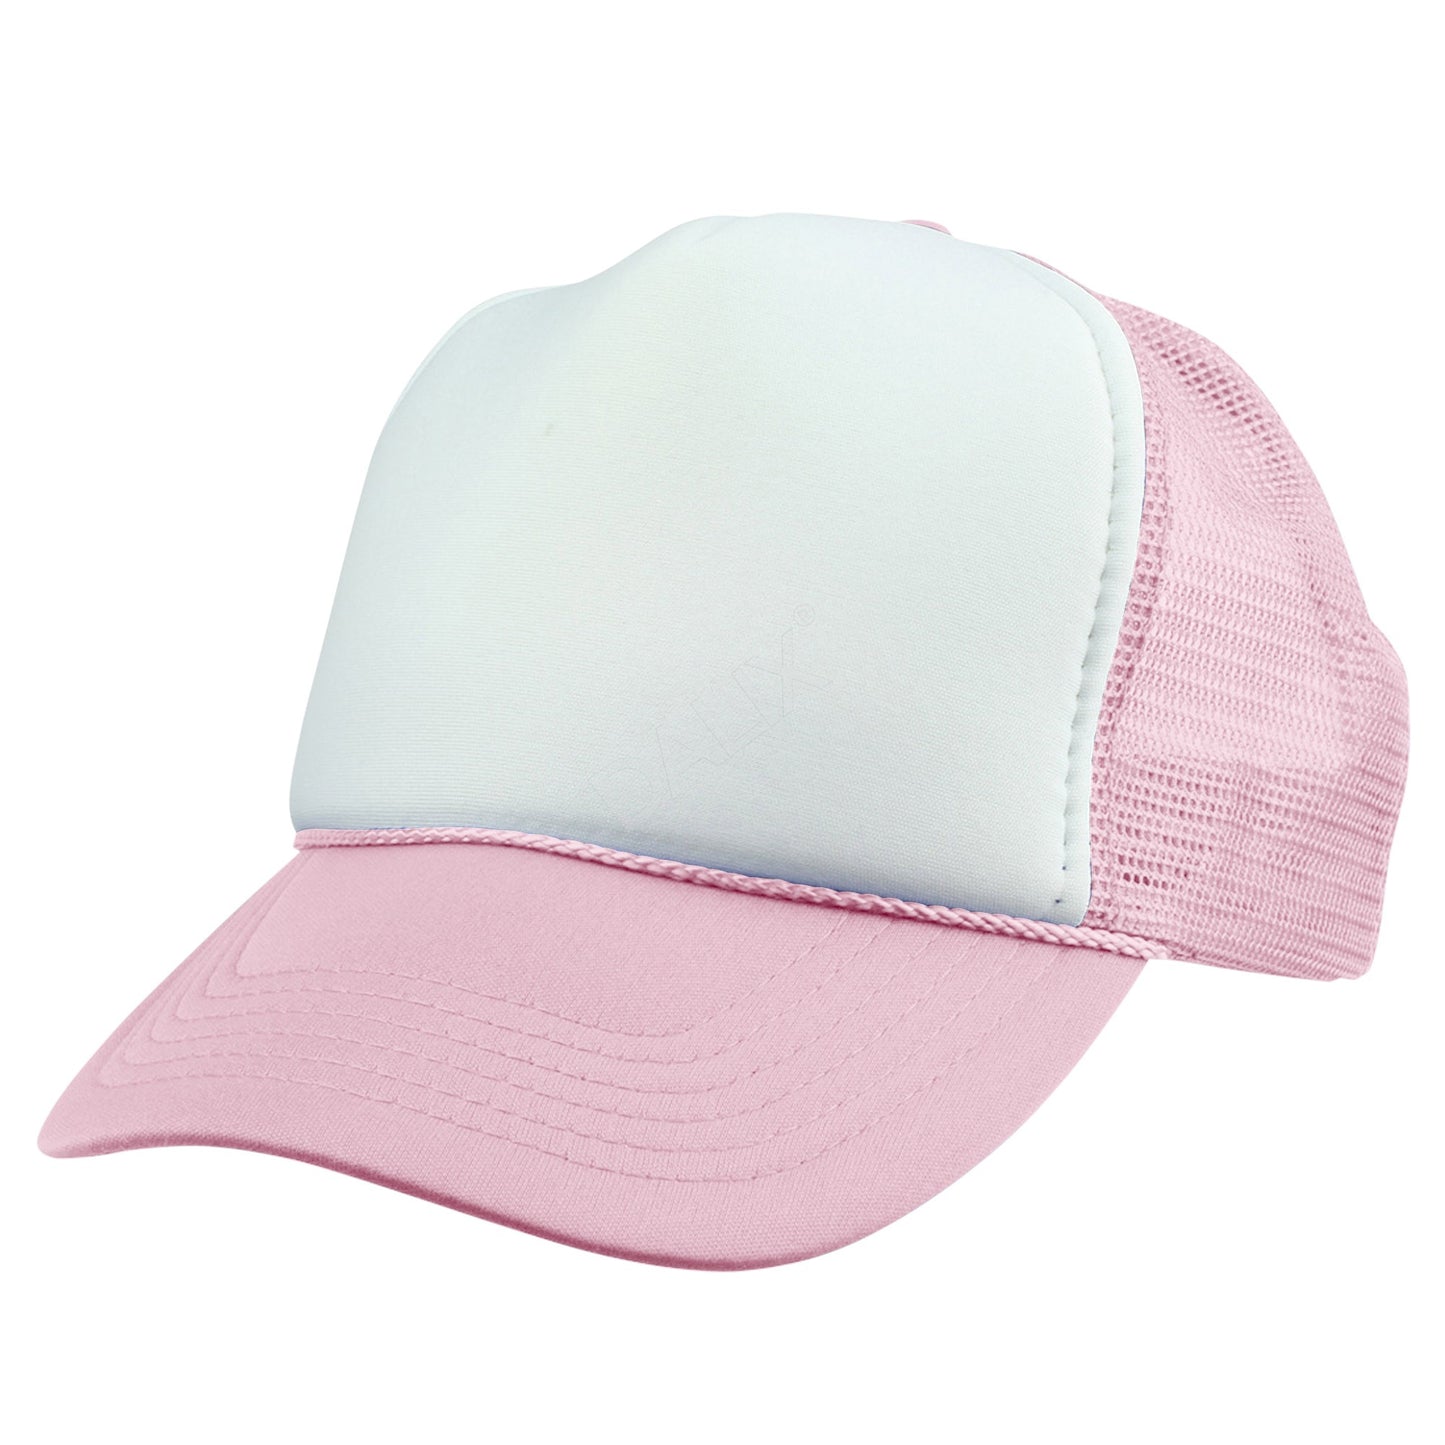 Basic Trucker Hat with Mesh Back Adjustable Snapback Cap